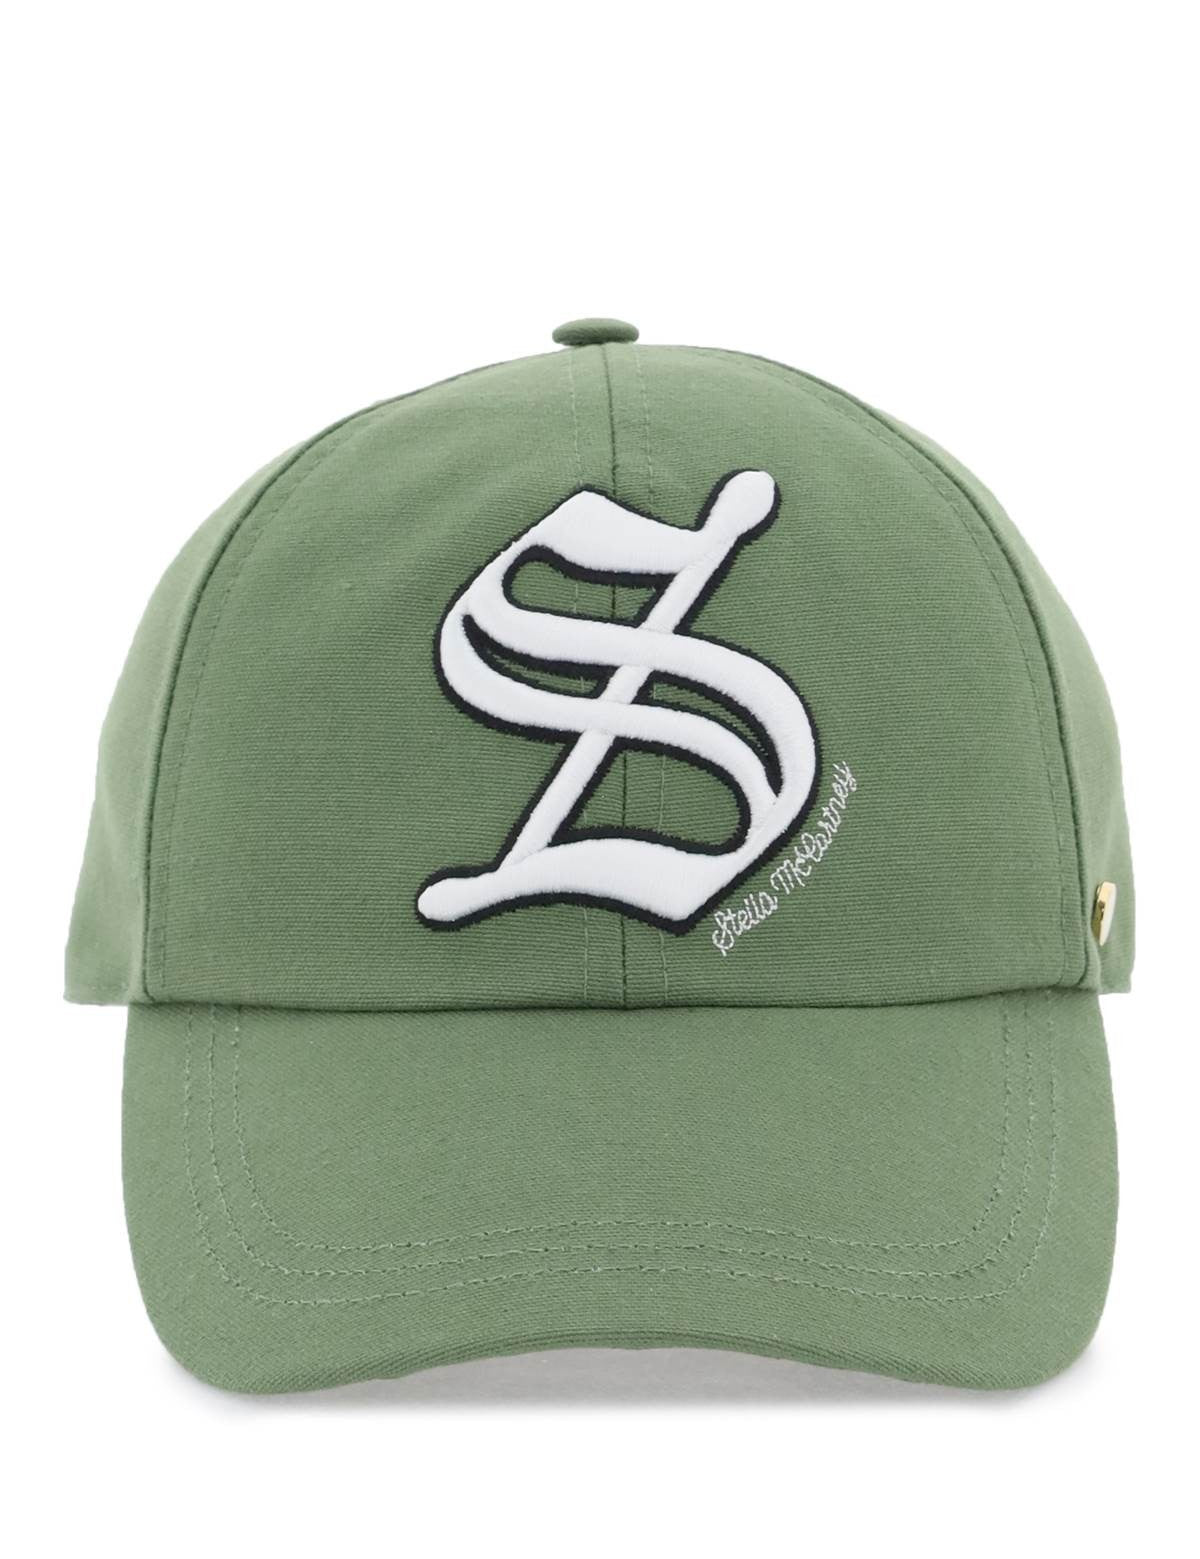 stella-mccartney-embroidered-baseball-cap.jpg